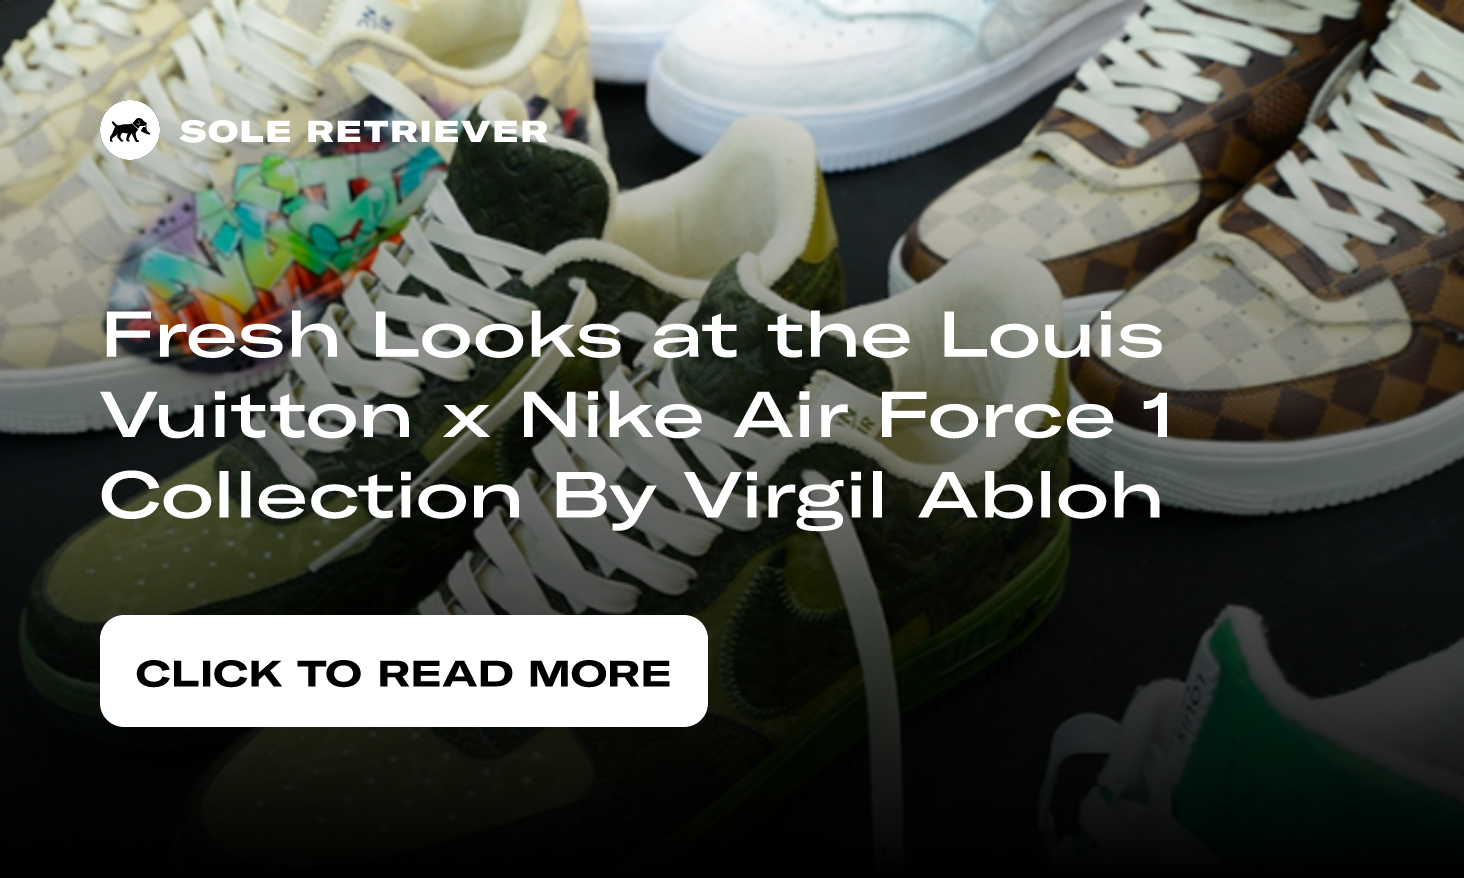 Virgil Abloh's Louis Vuitton x Nike “Air Force 1” Heading To